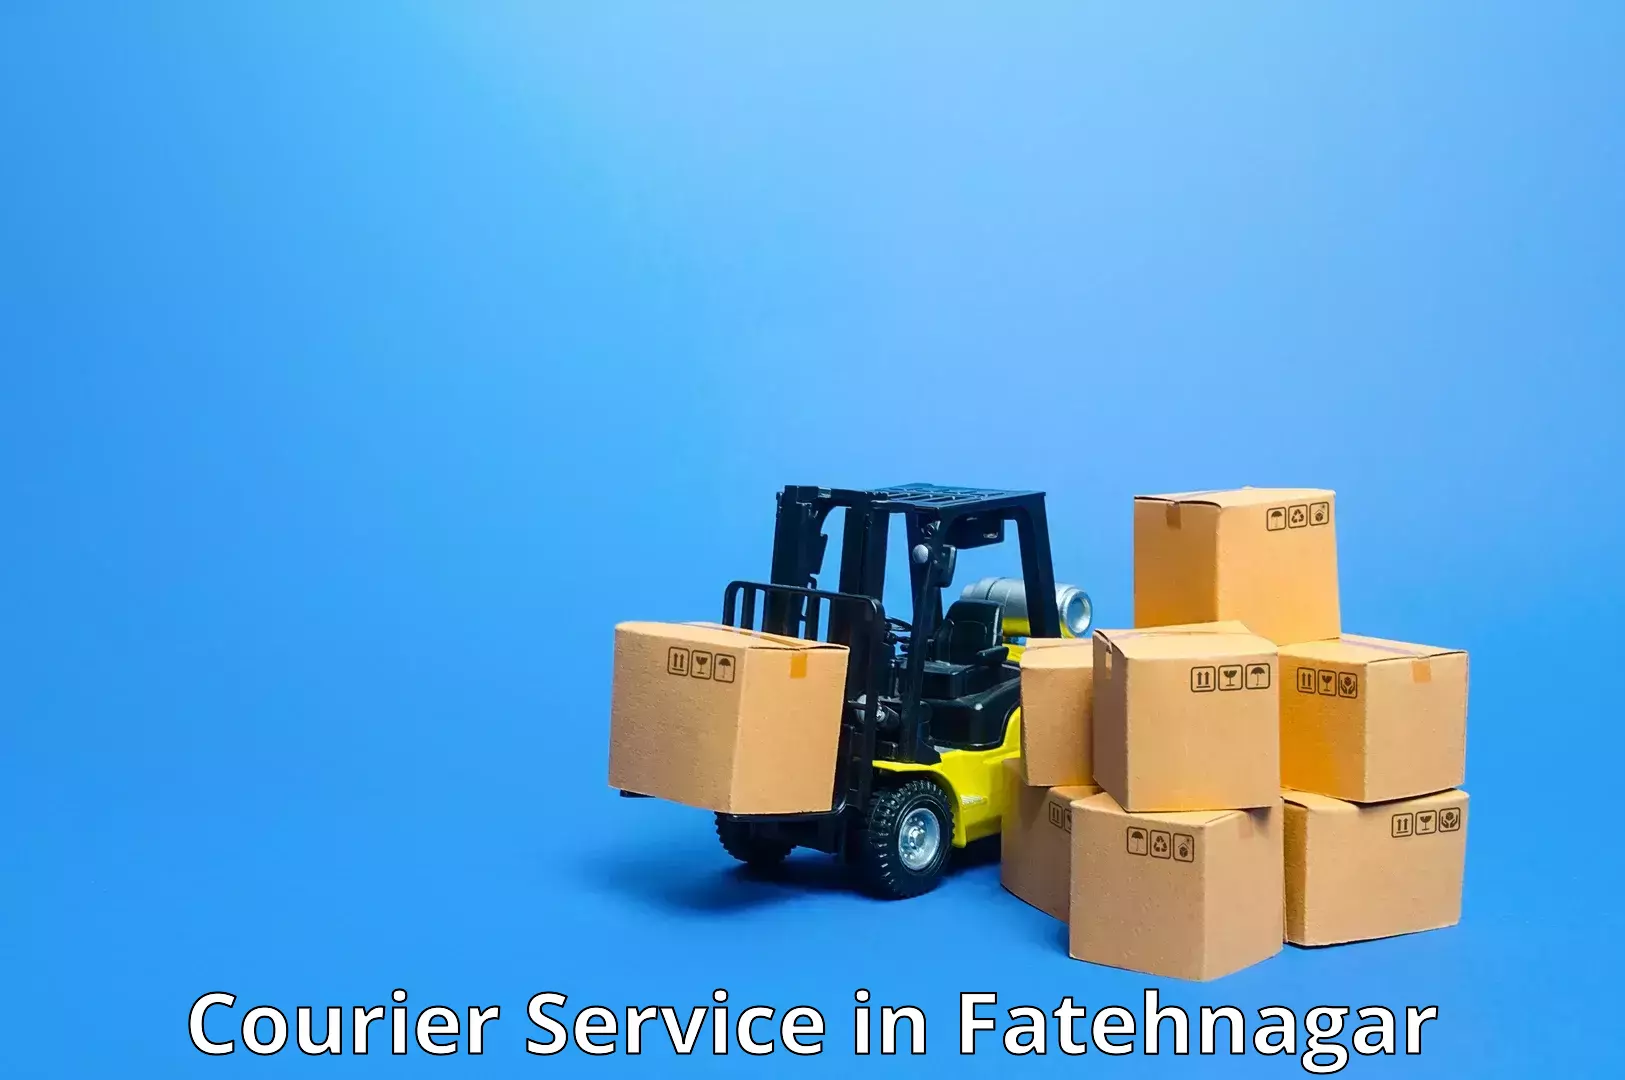 Enhanced shipping experience in Fatehnagar